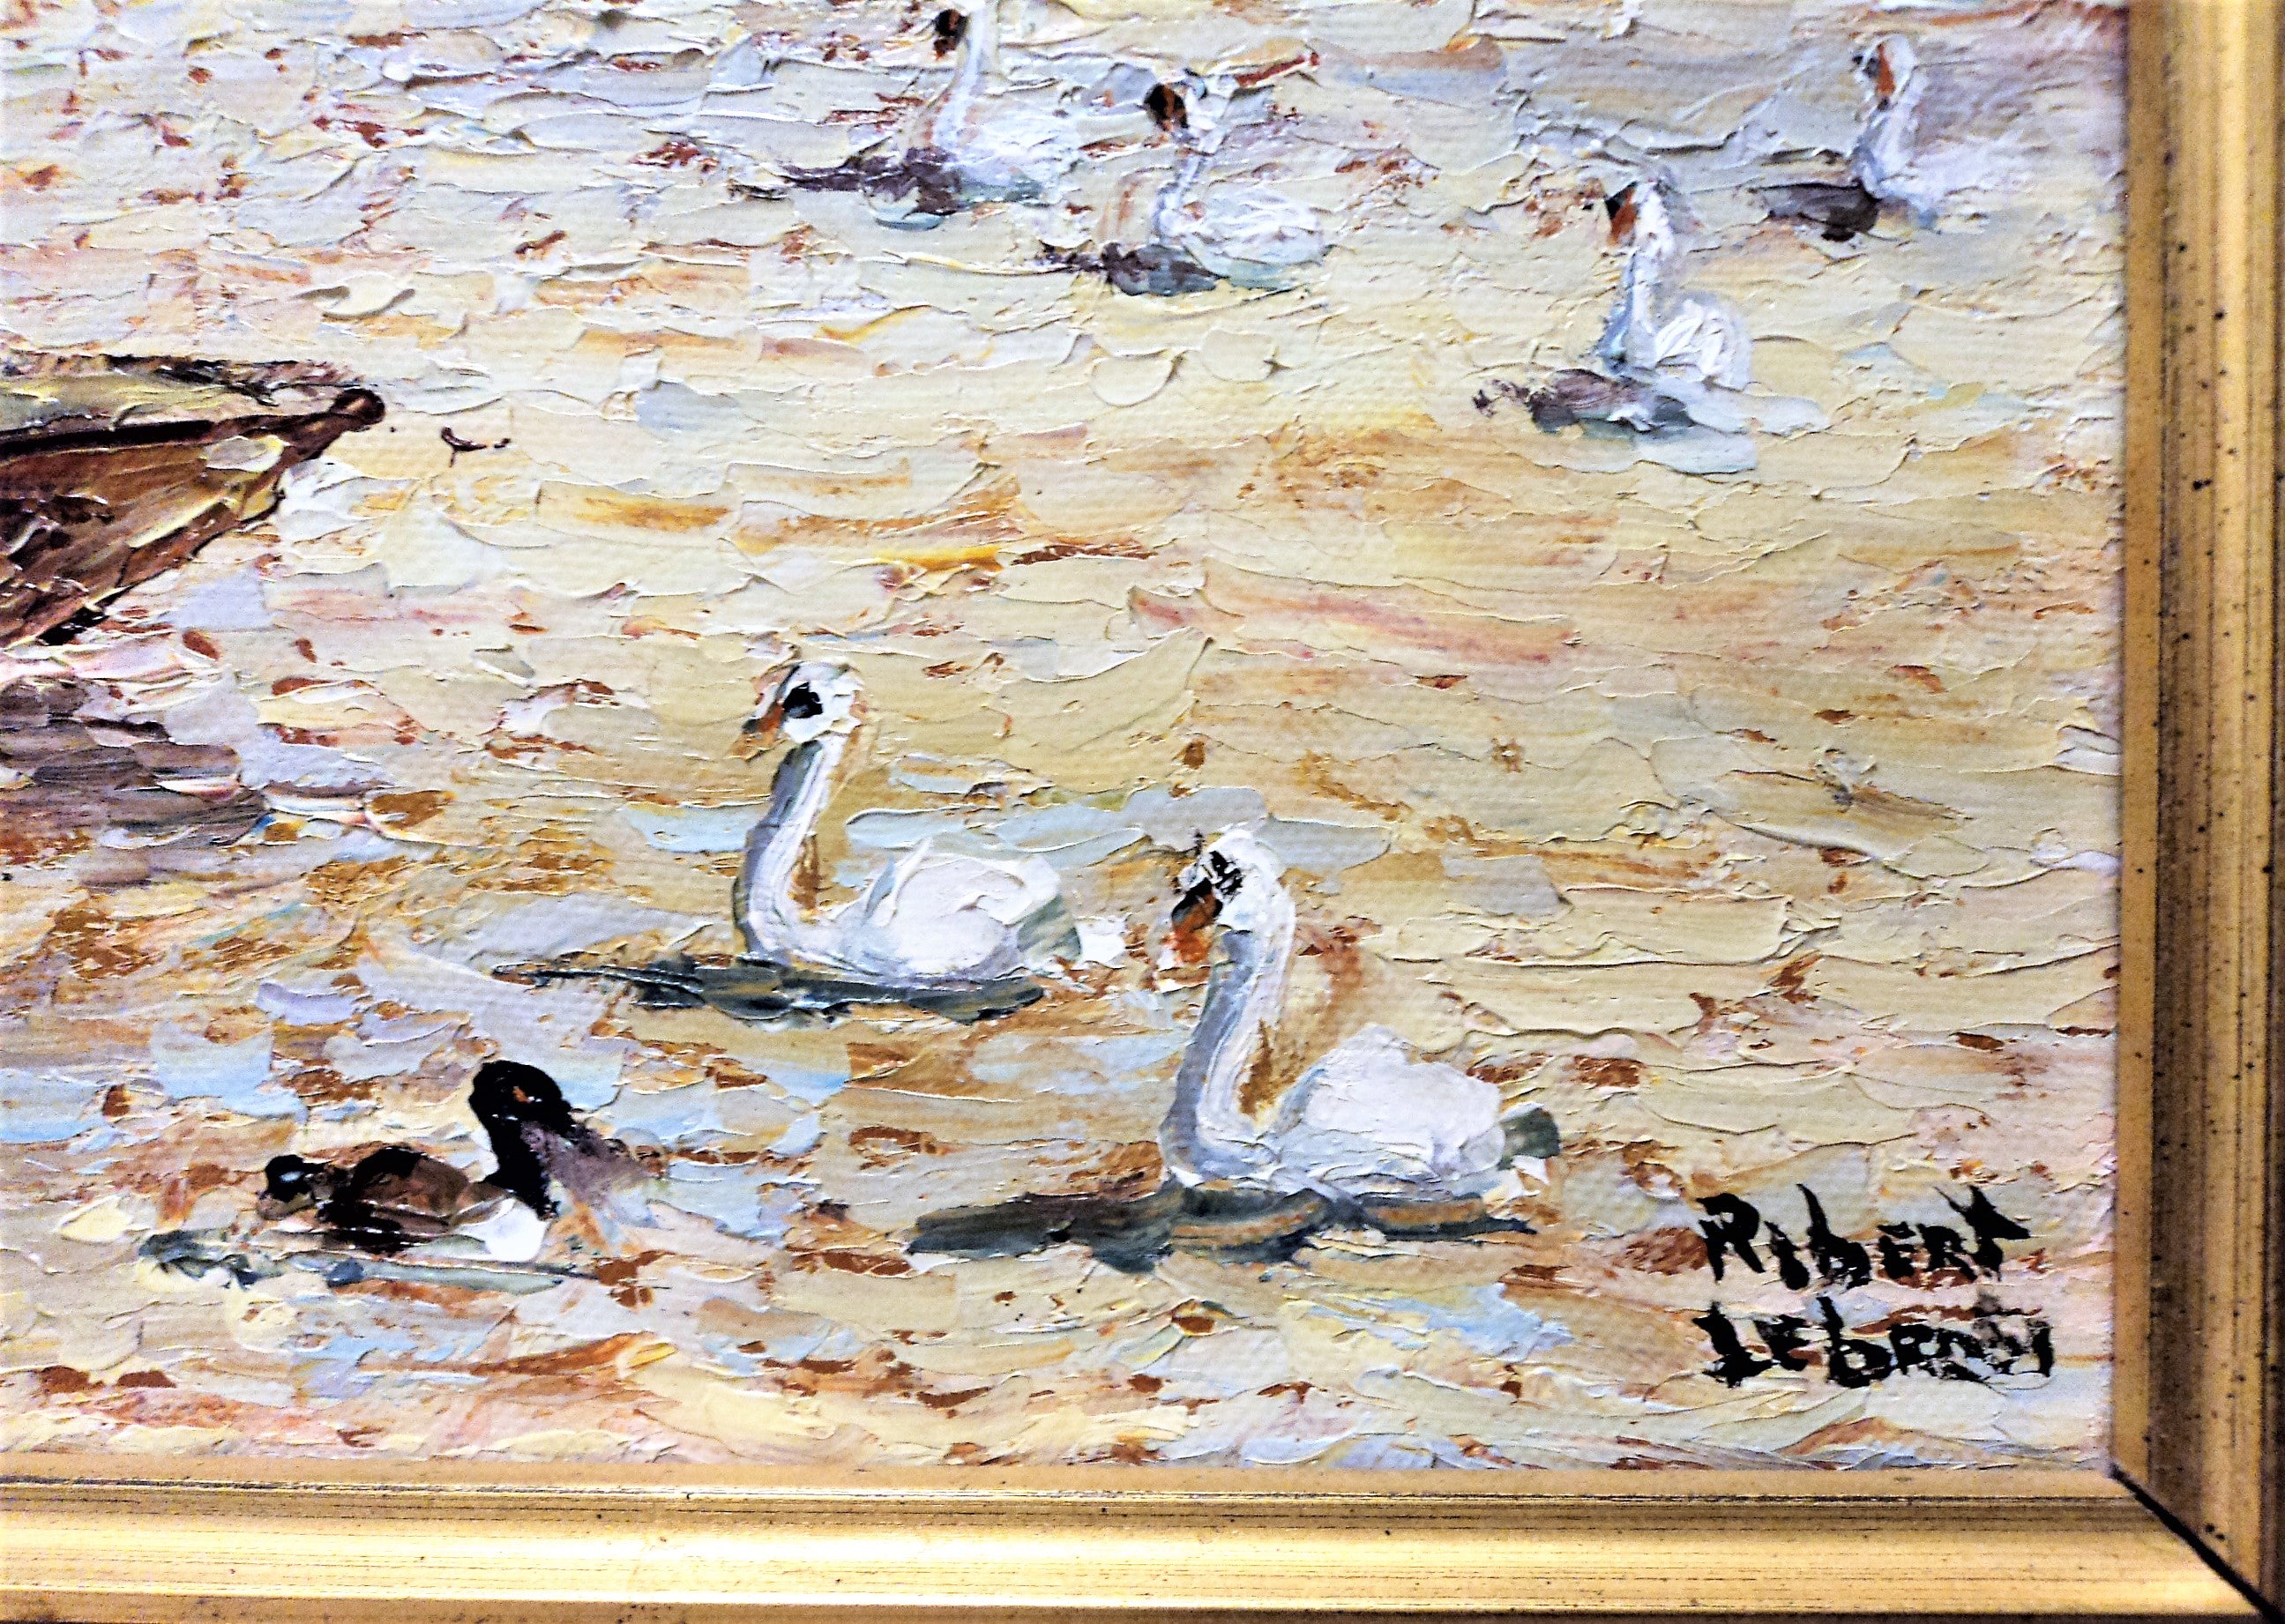 Robert Lebron Original Oil Painting On the Seine